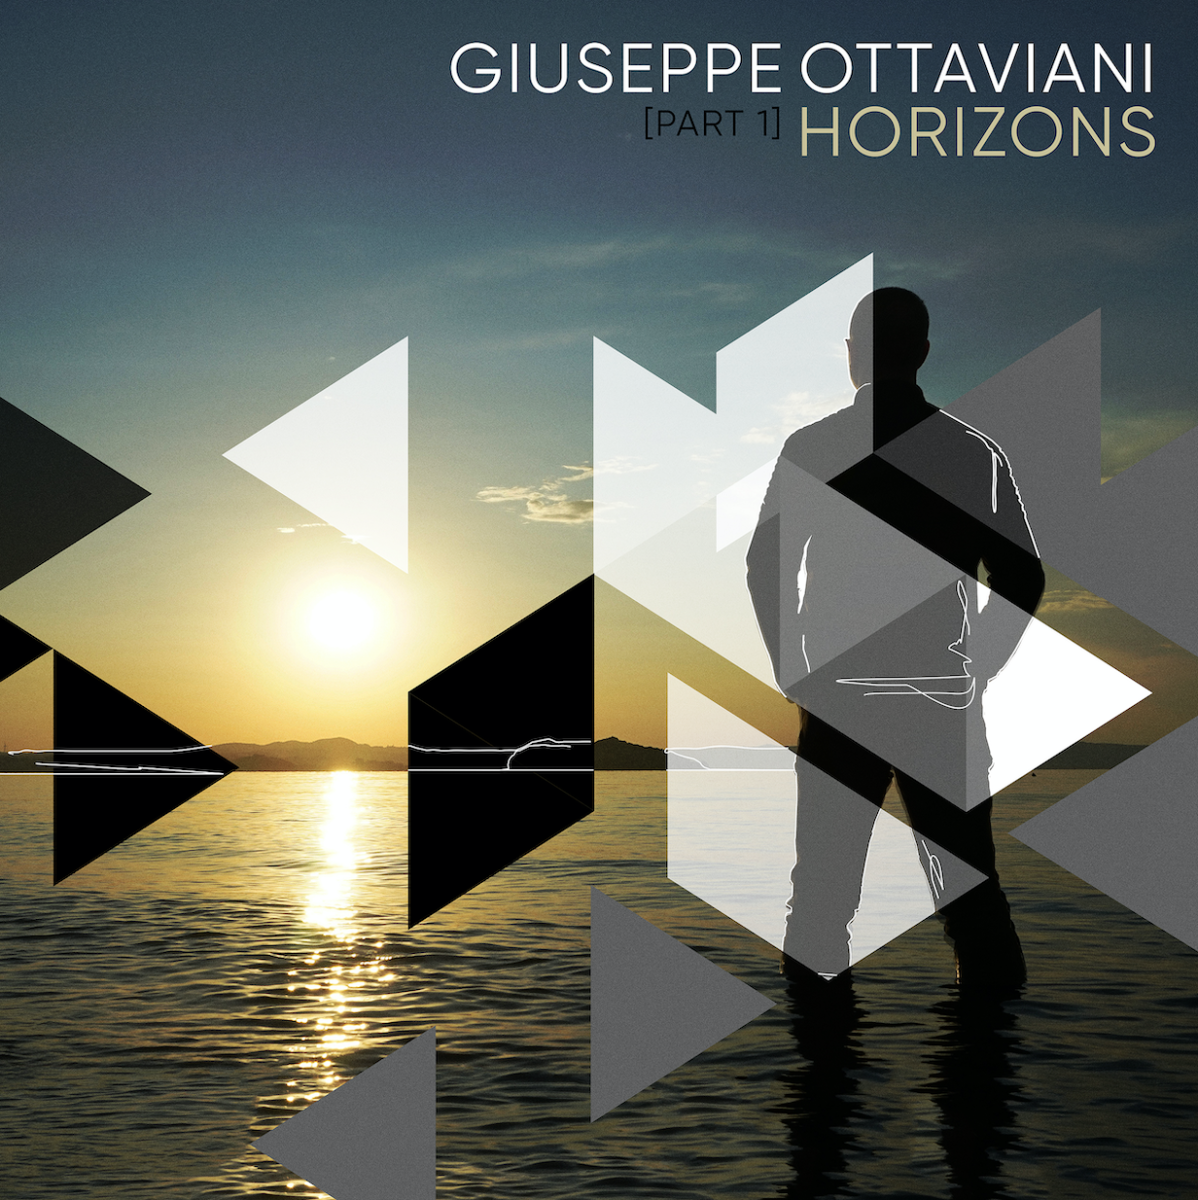 Giuseppe Ottaviani opts for mindfulness in his latest album, “Horizons” [Part 1]-EDM.com